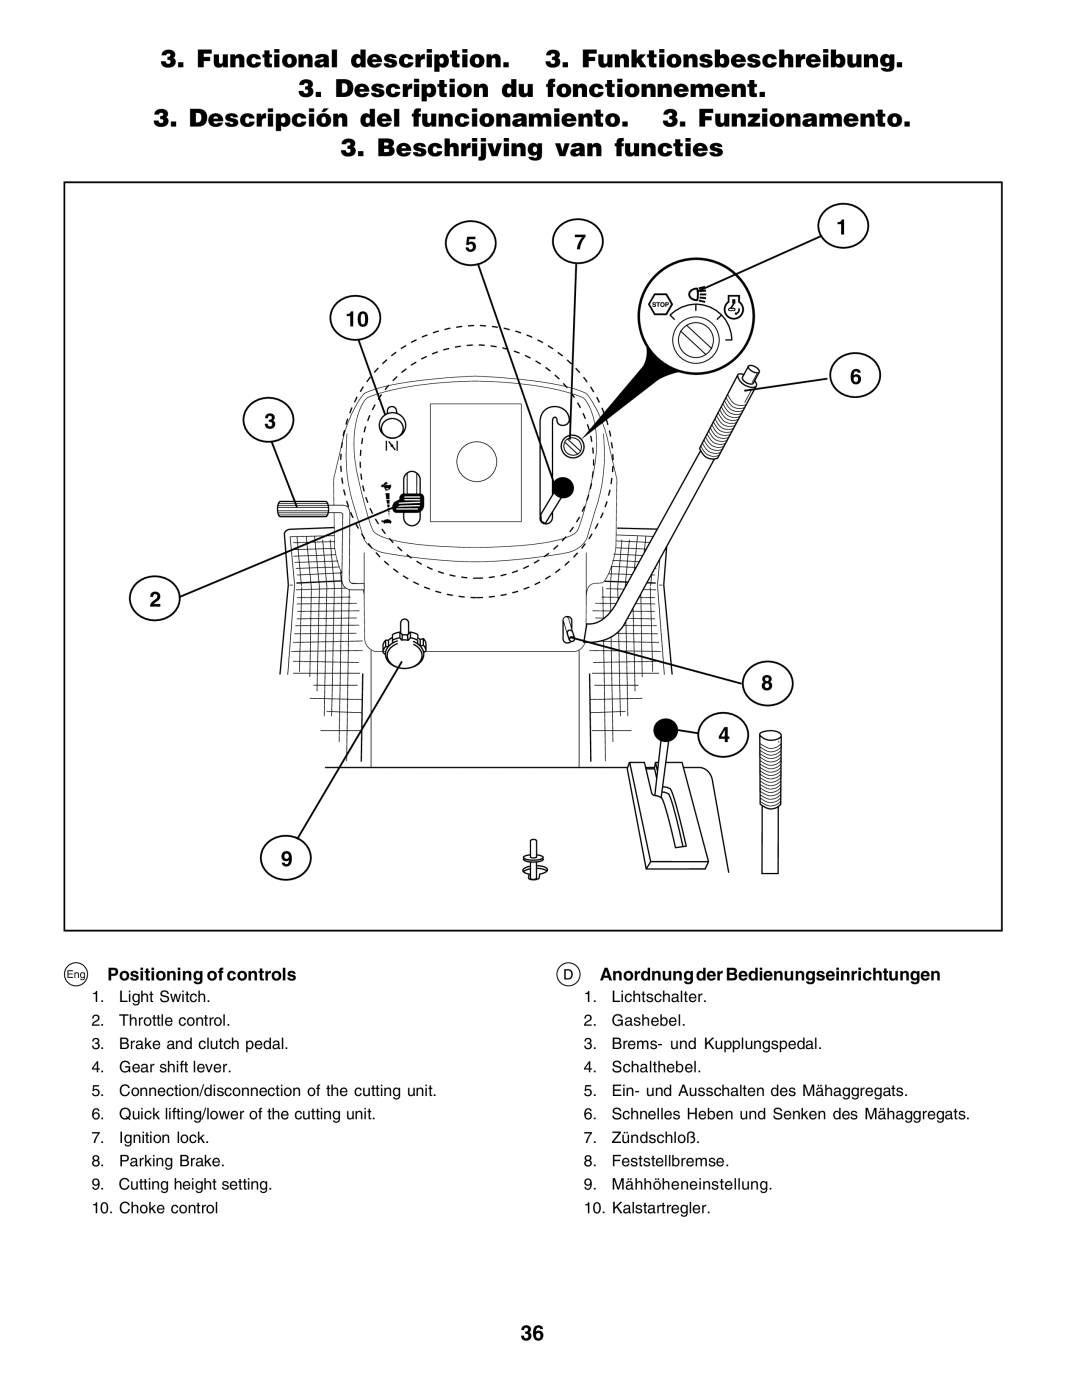 Husqvarna CT135 instruction manual Description du fonctionnement, Beschrijving van functies, Positioning of controls 